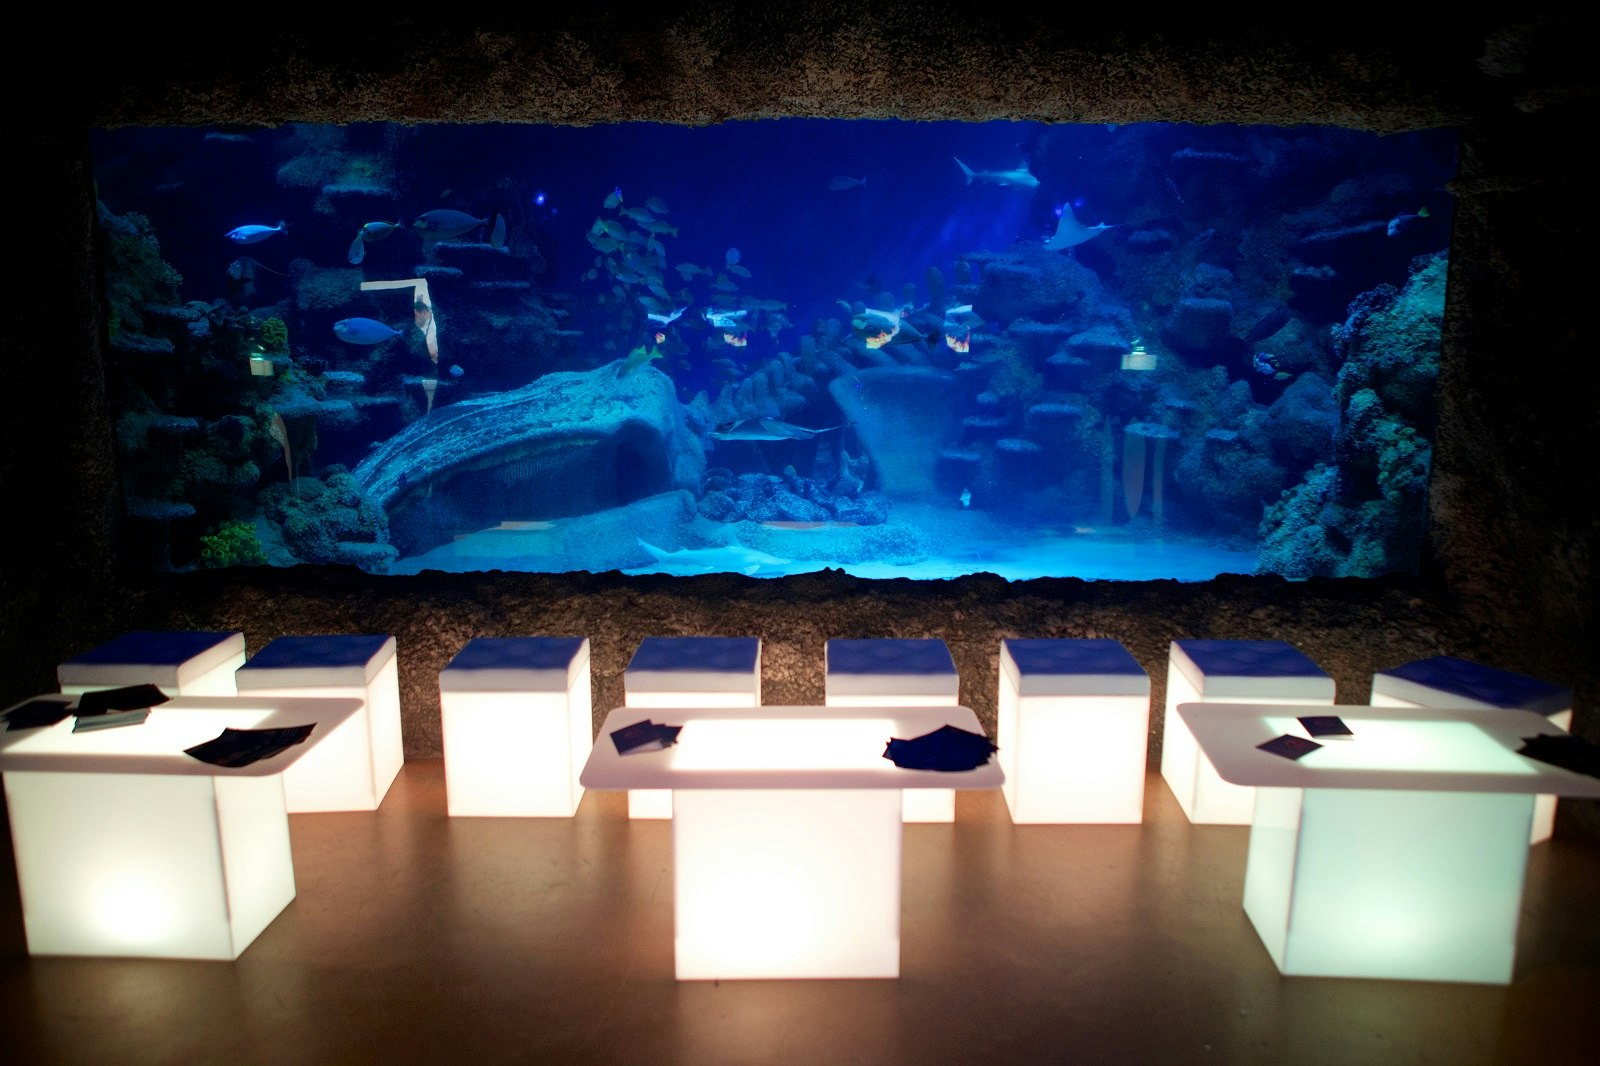 Bar Mitzvah Venues in London - SEA LIFE London Aquarium